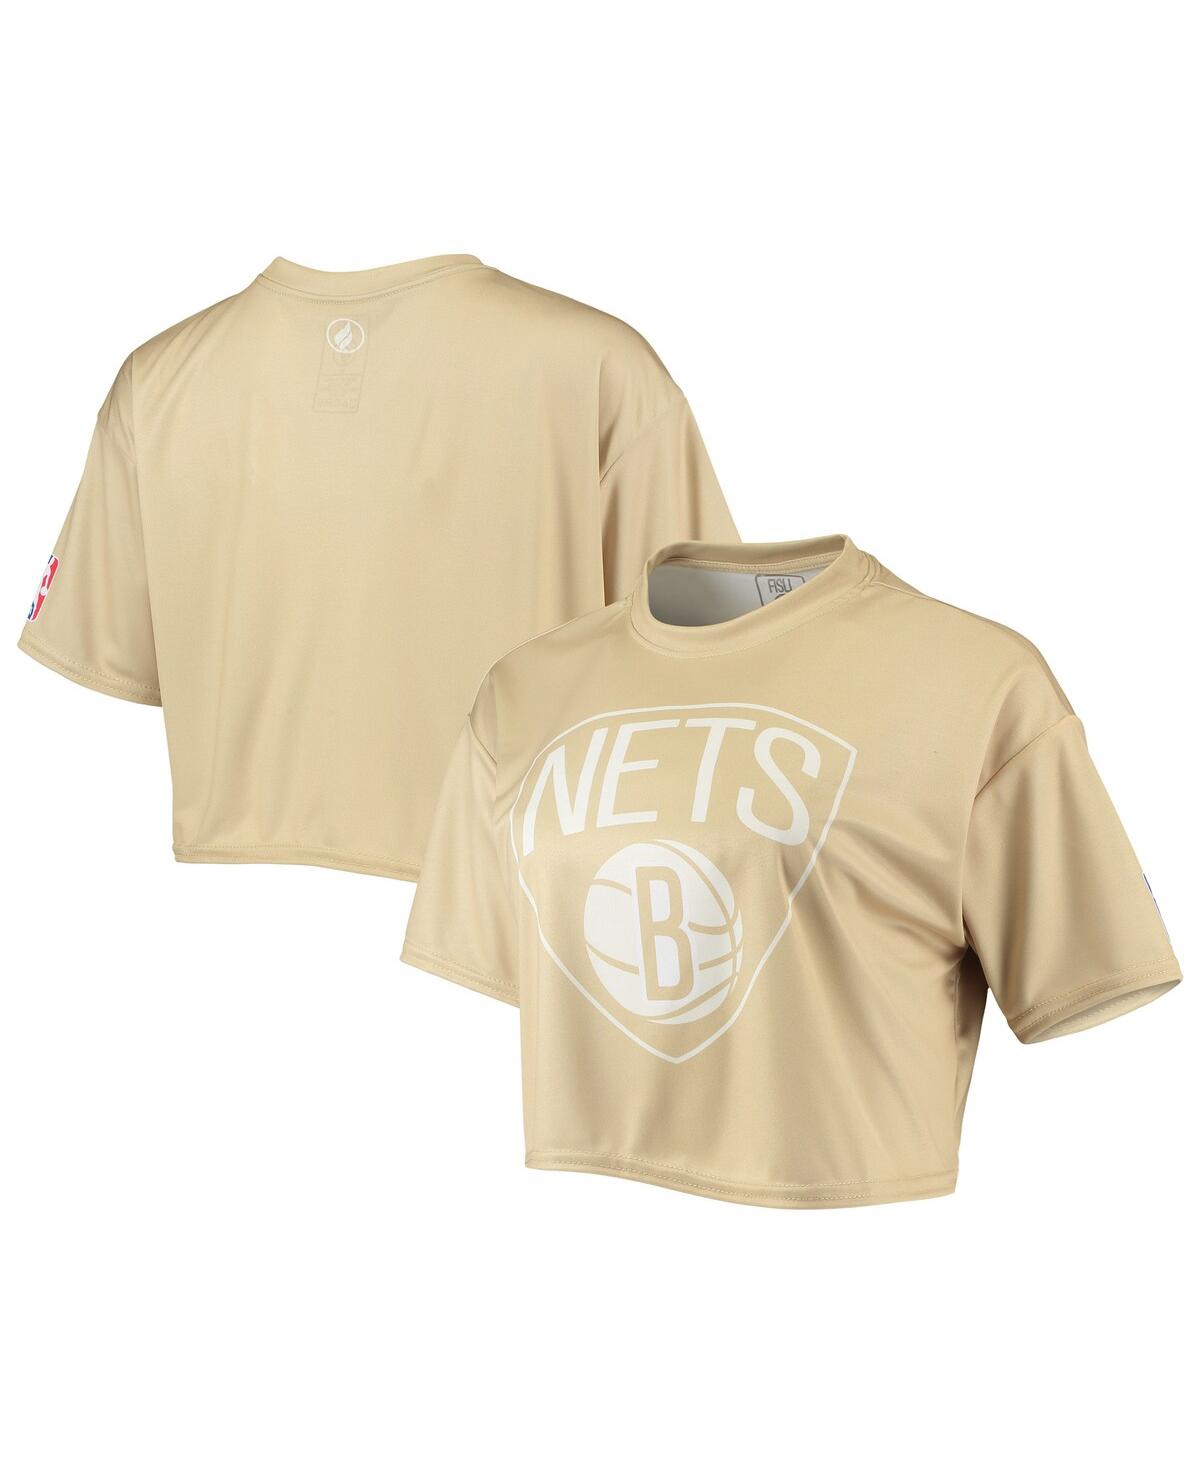 Shop Nba Exclusive Collection Women's Tan Brooklyn Nets Sand Crop Top